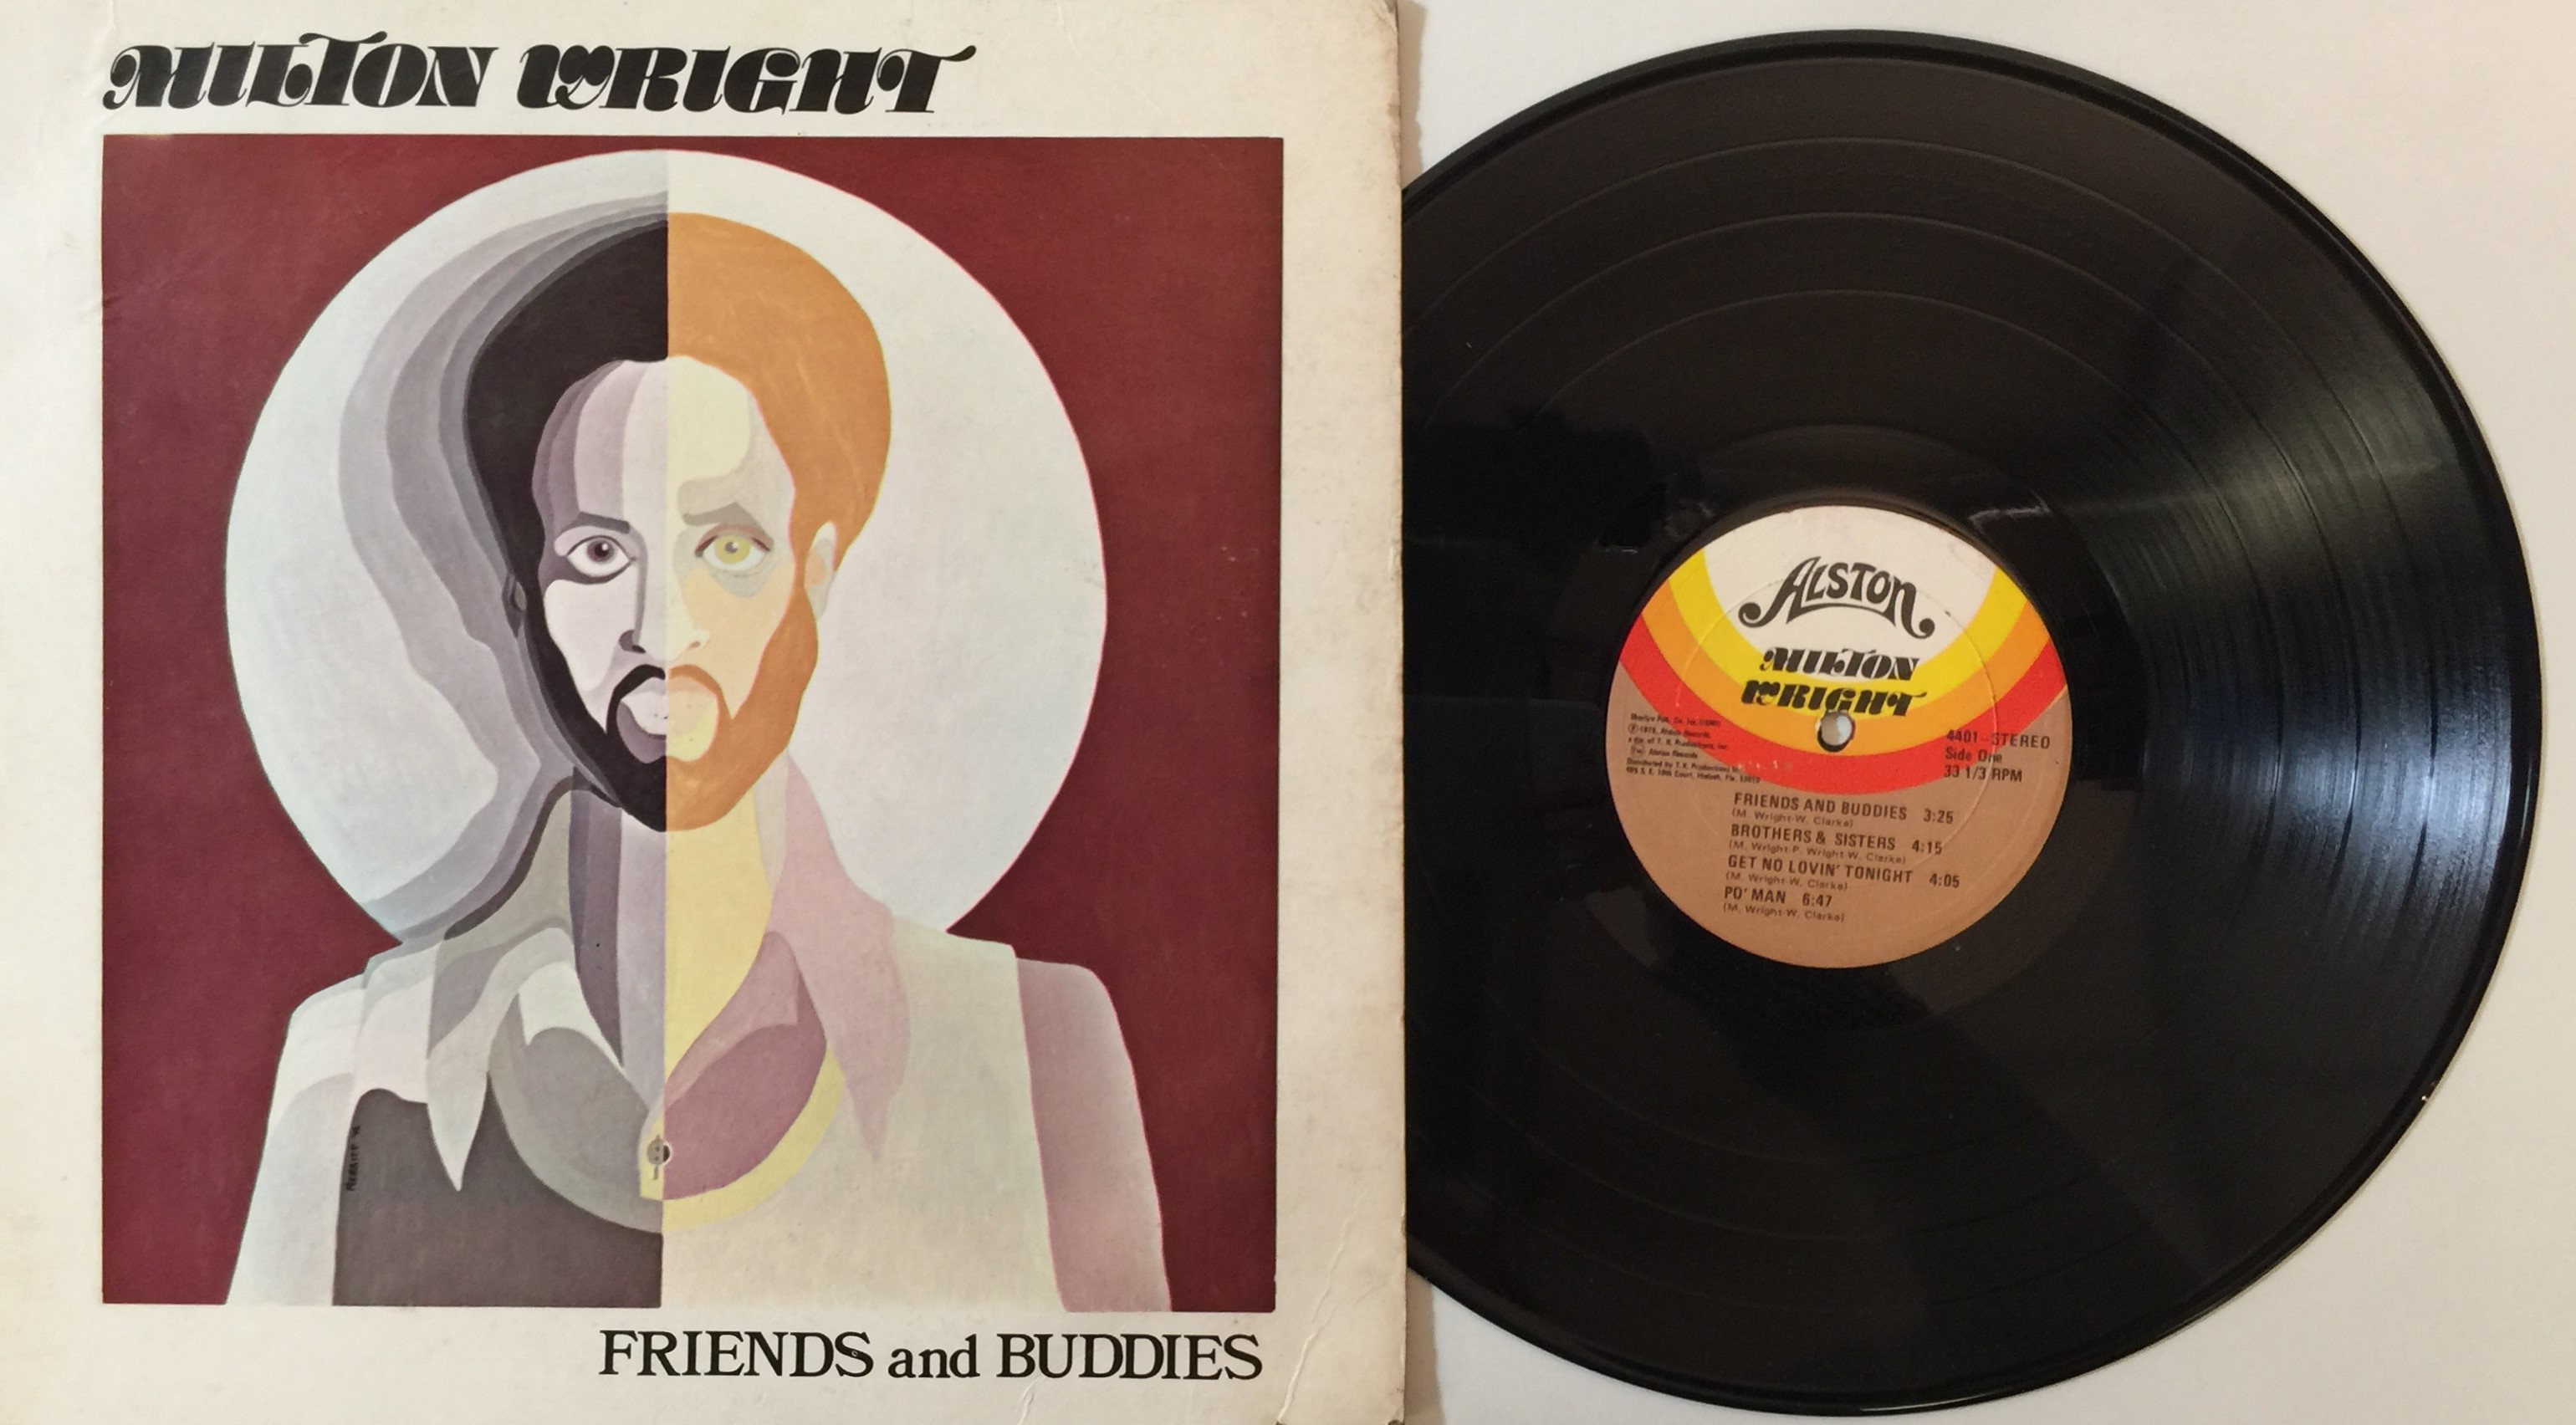 Lot 1038 - MILTON WRIGHT - FRIENDS AND BUDDIES LP (US